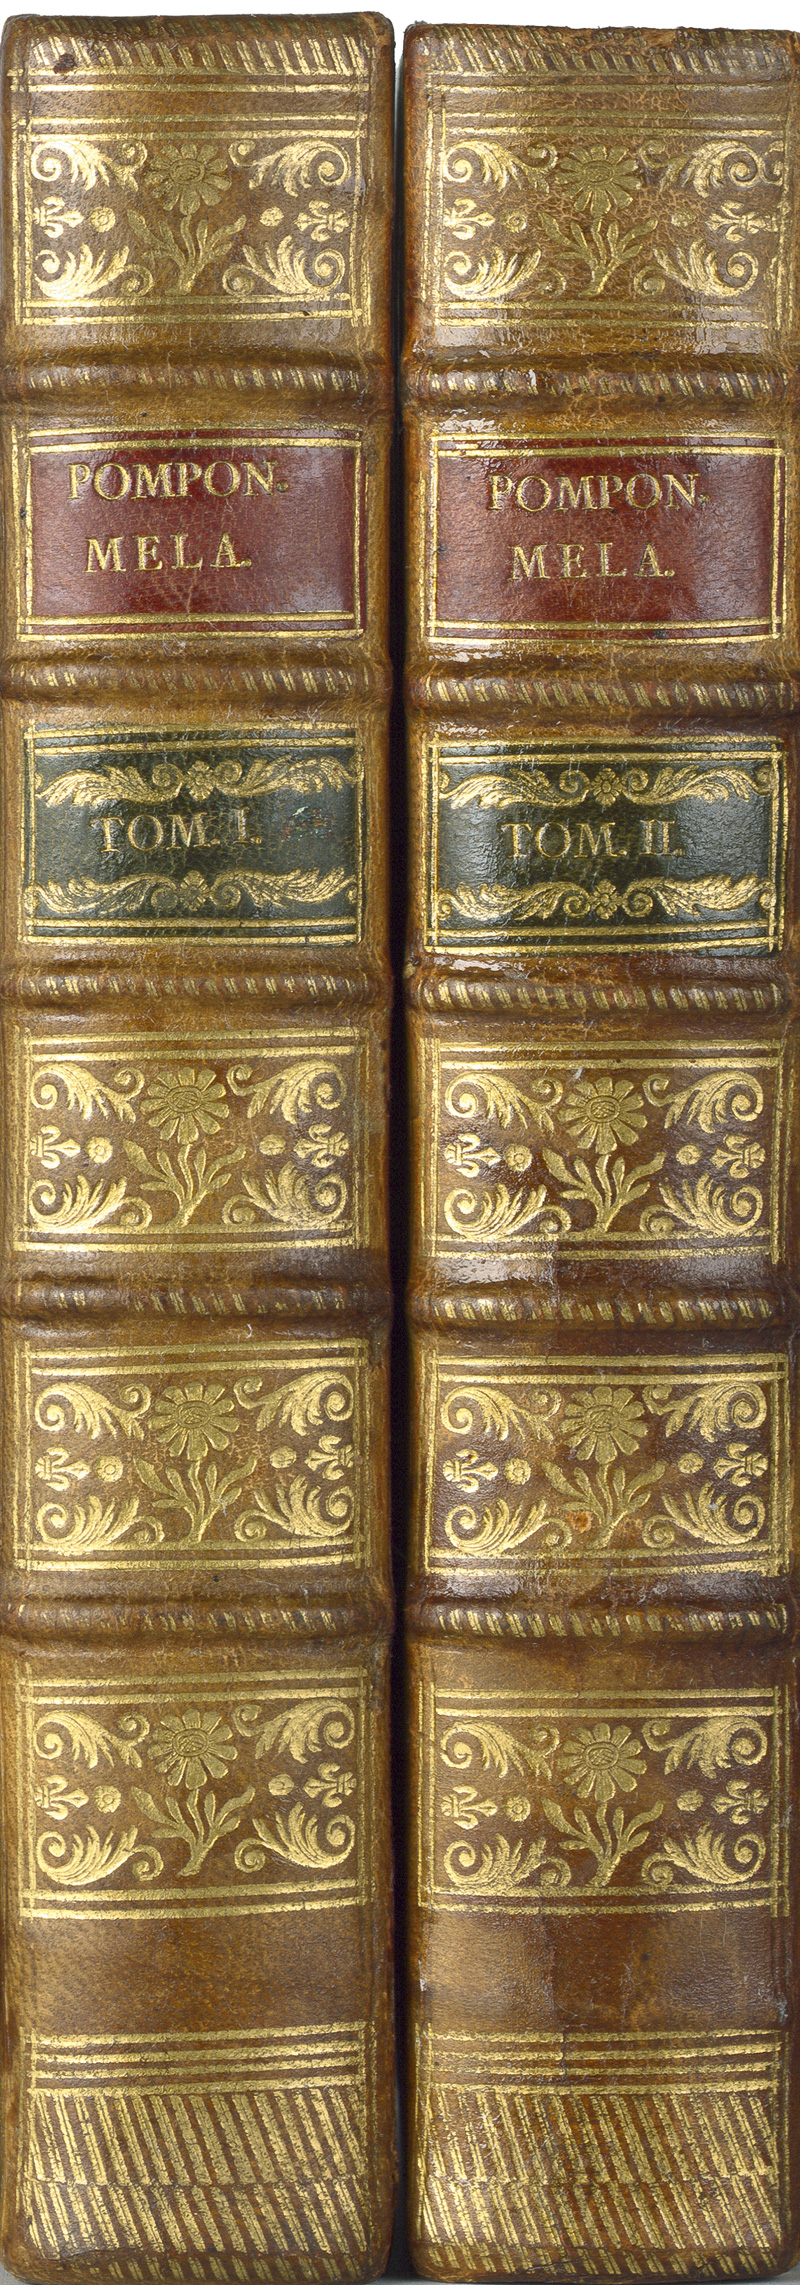 Mela, Pomponius: De situ orbis libri III